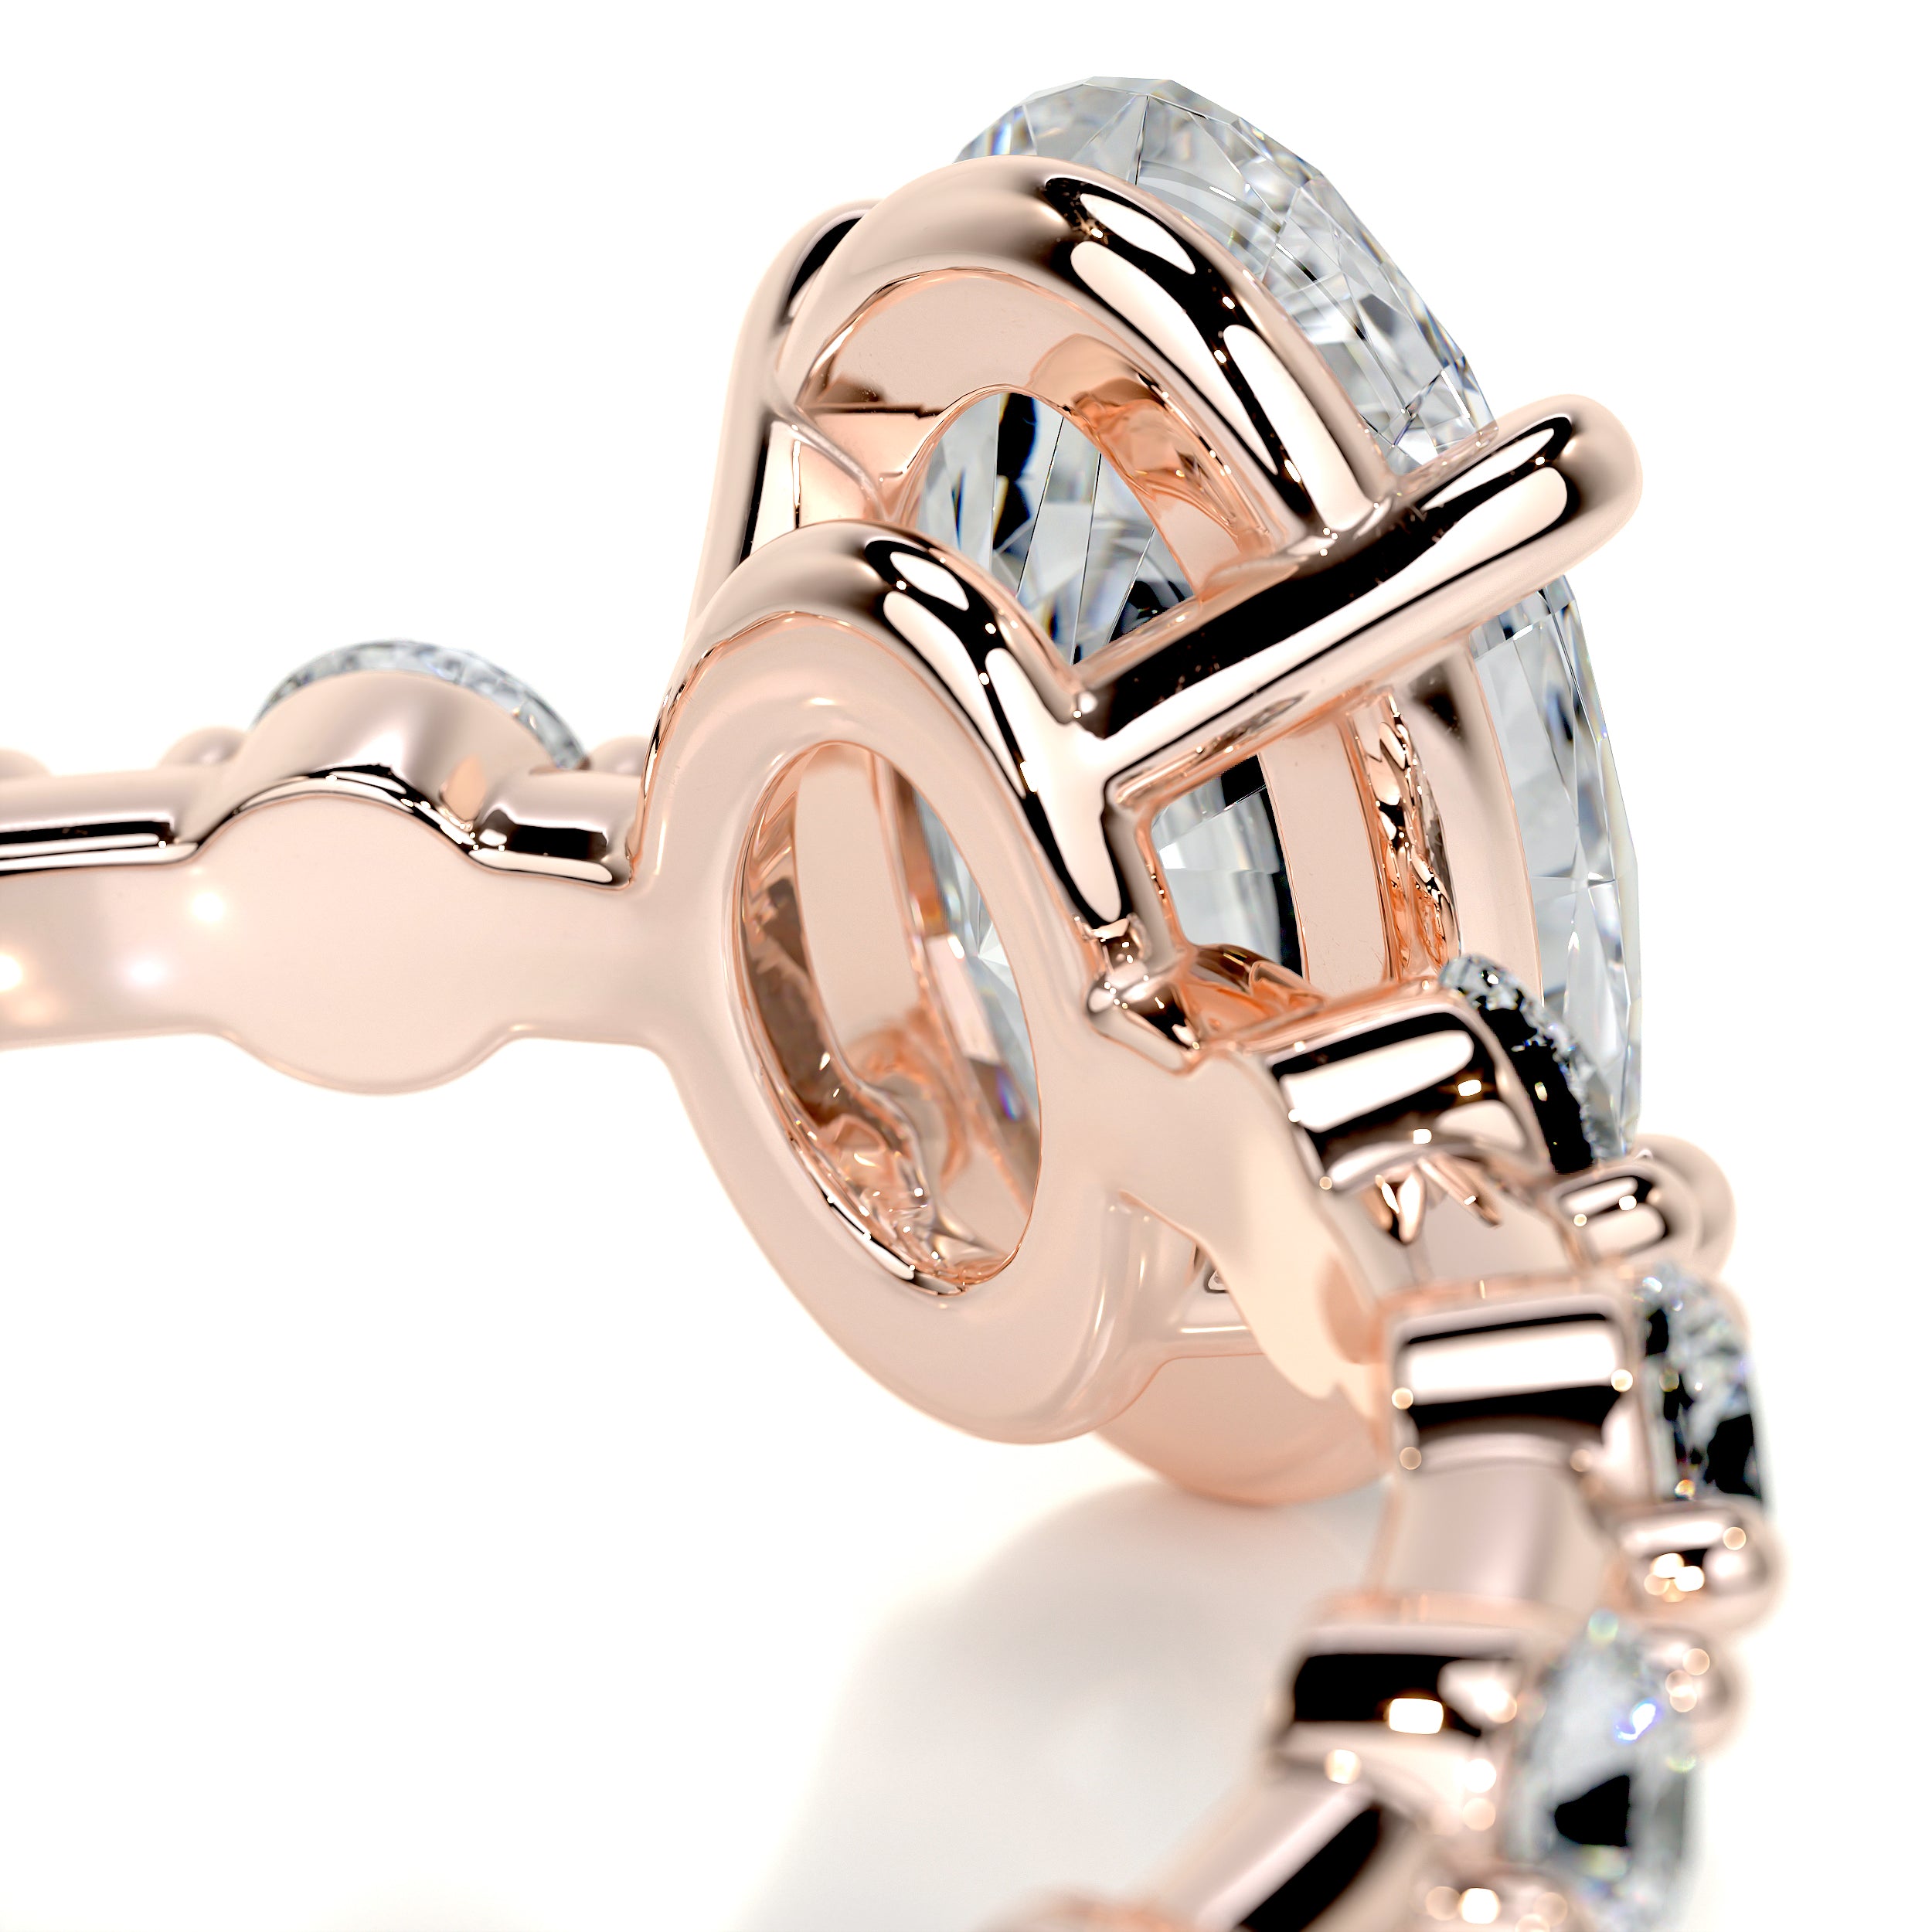 Bell Diamond Engagement Ring   (1.5 Carat) -14K Rose Gold